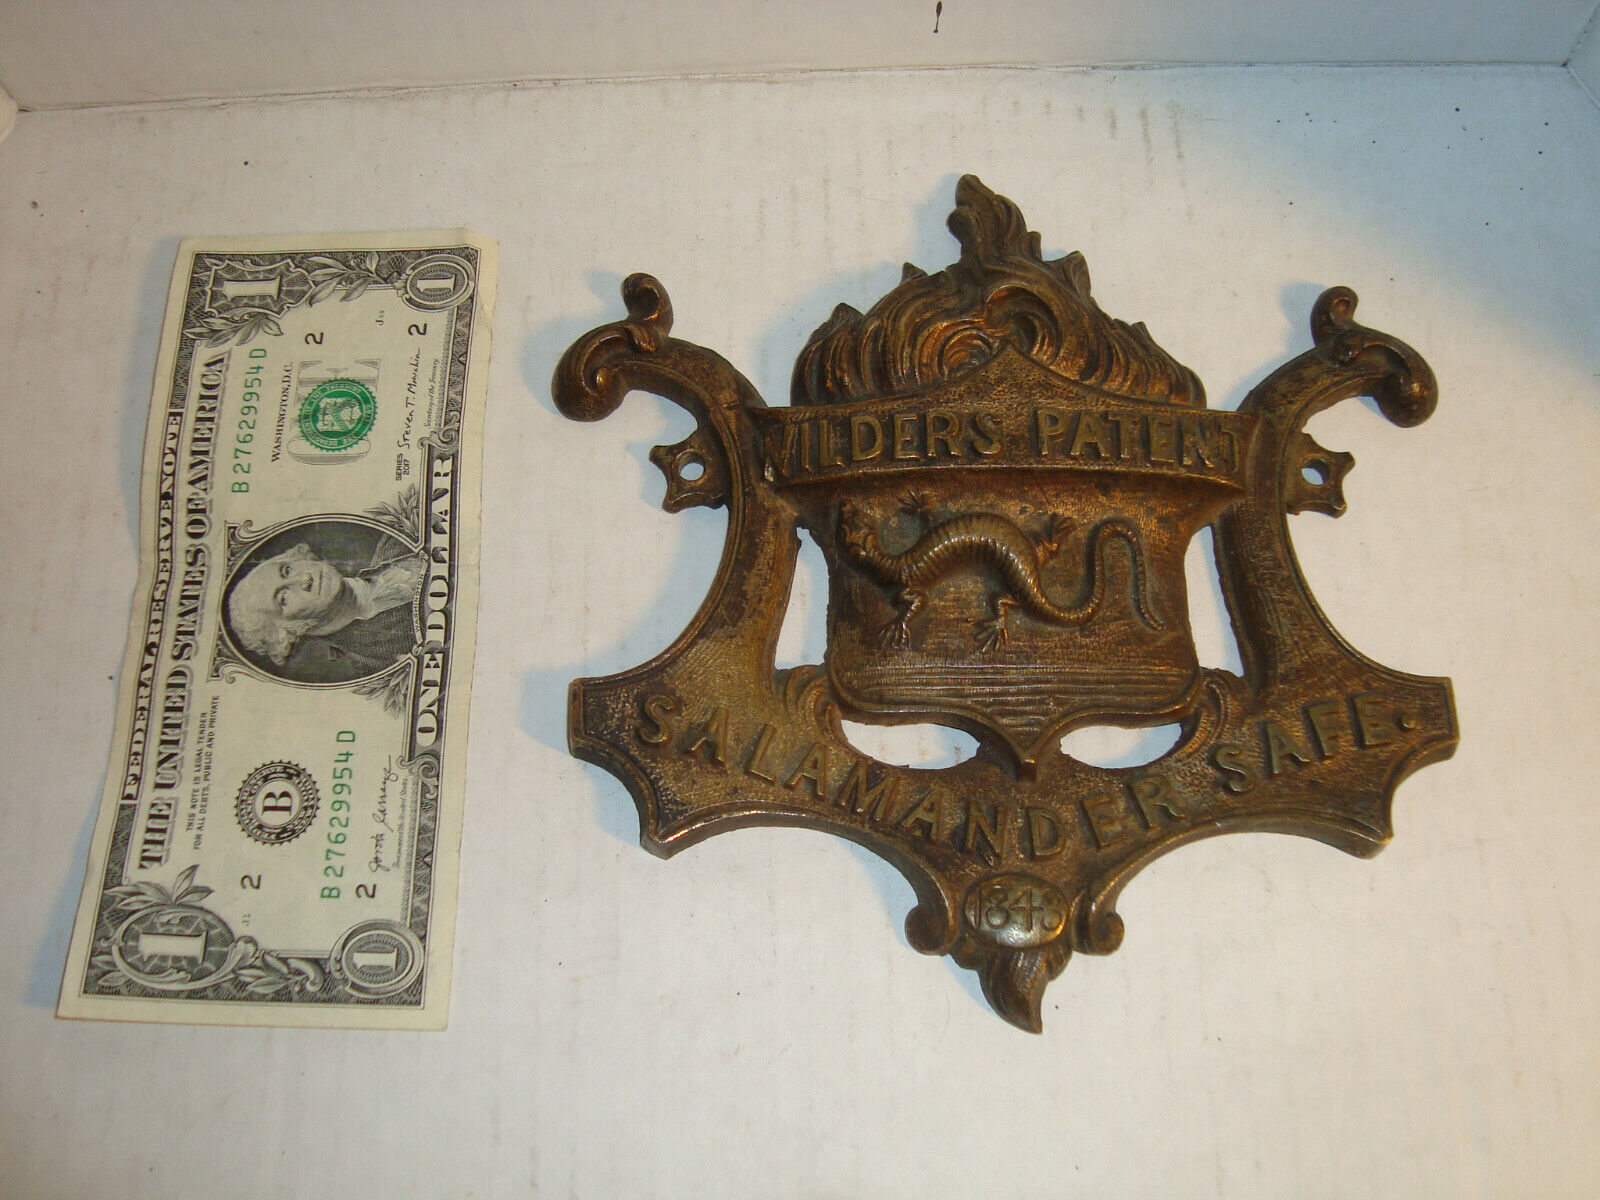 Early Antique Salamander Safe Bronze Plaque Wilders Patent 1843